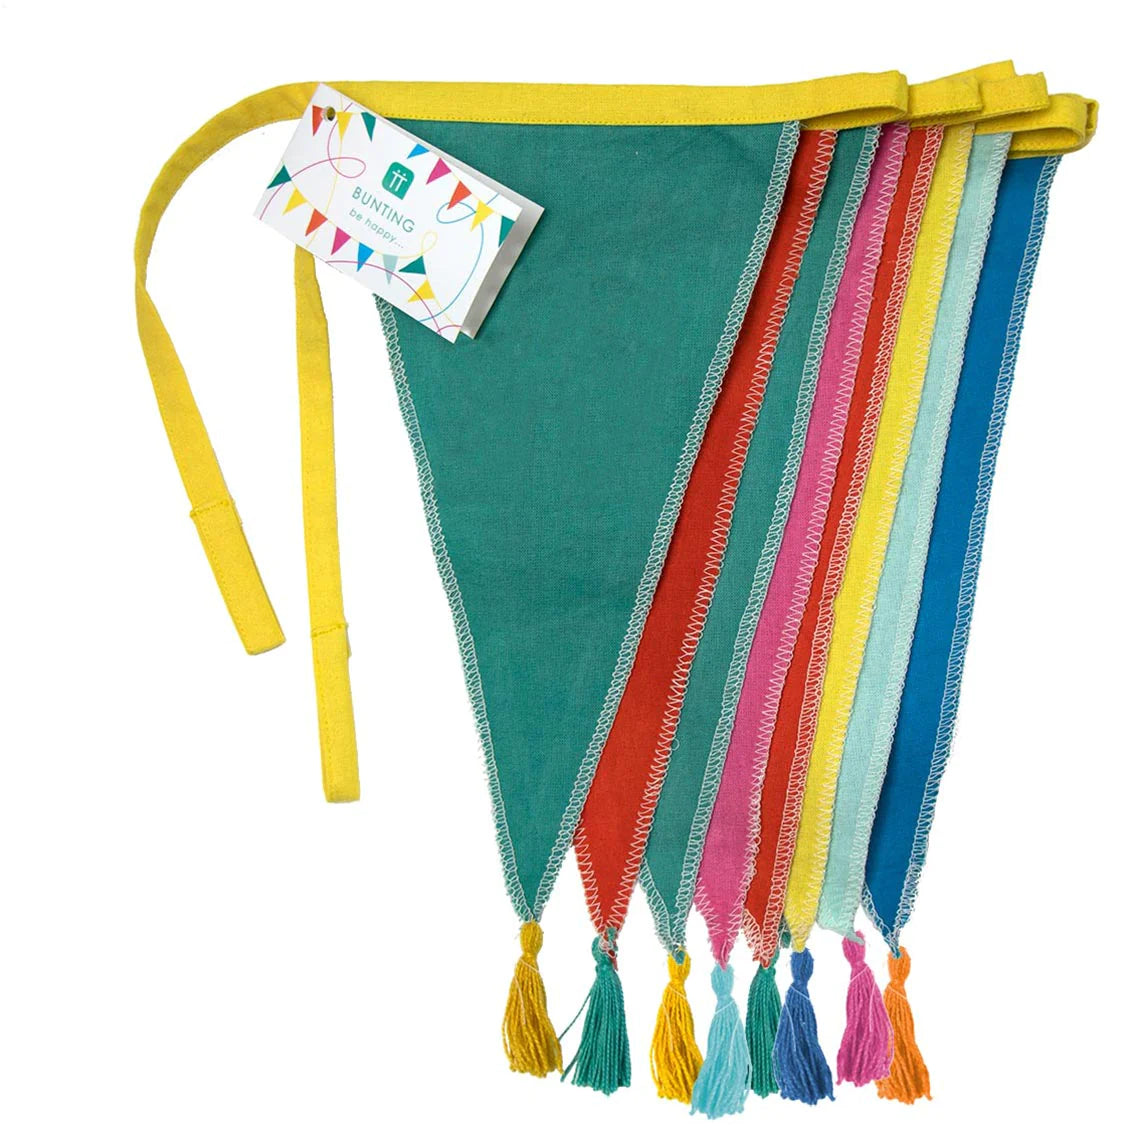 Multicolored fabric pennant garland